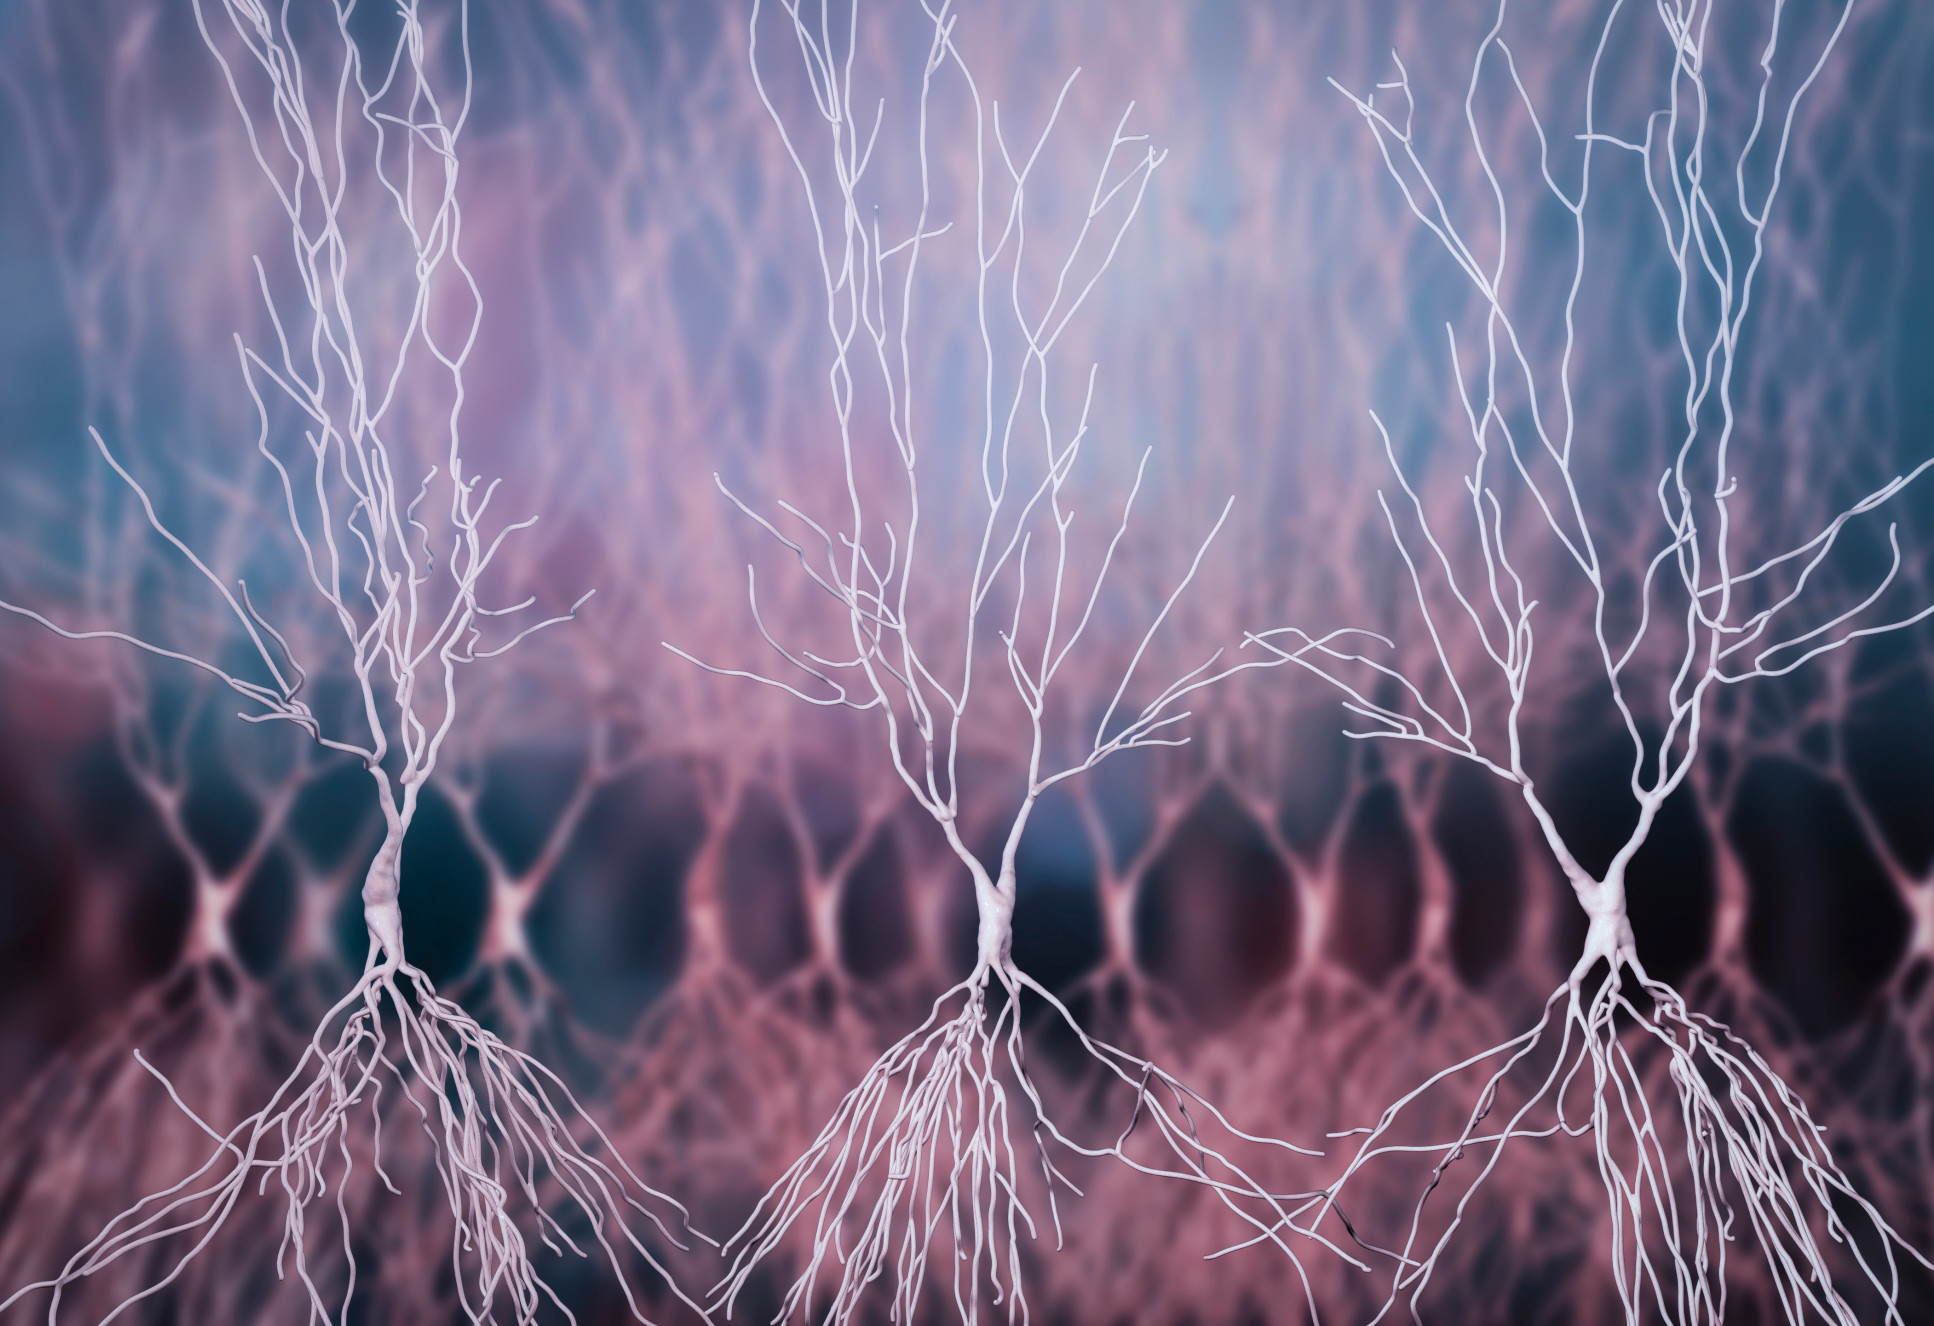 Human hippocampus neurons, computer reconstruction, 3D illustration